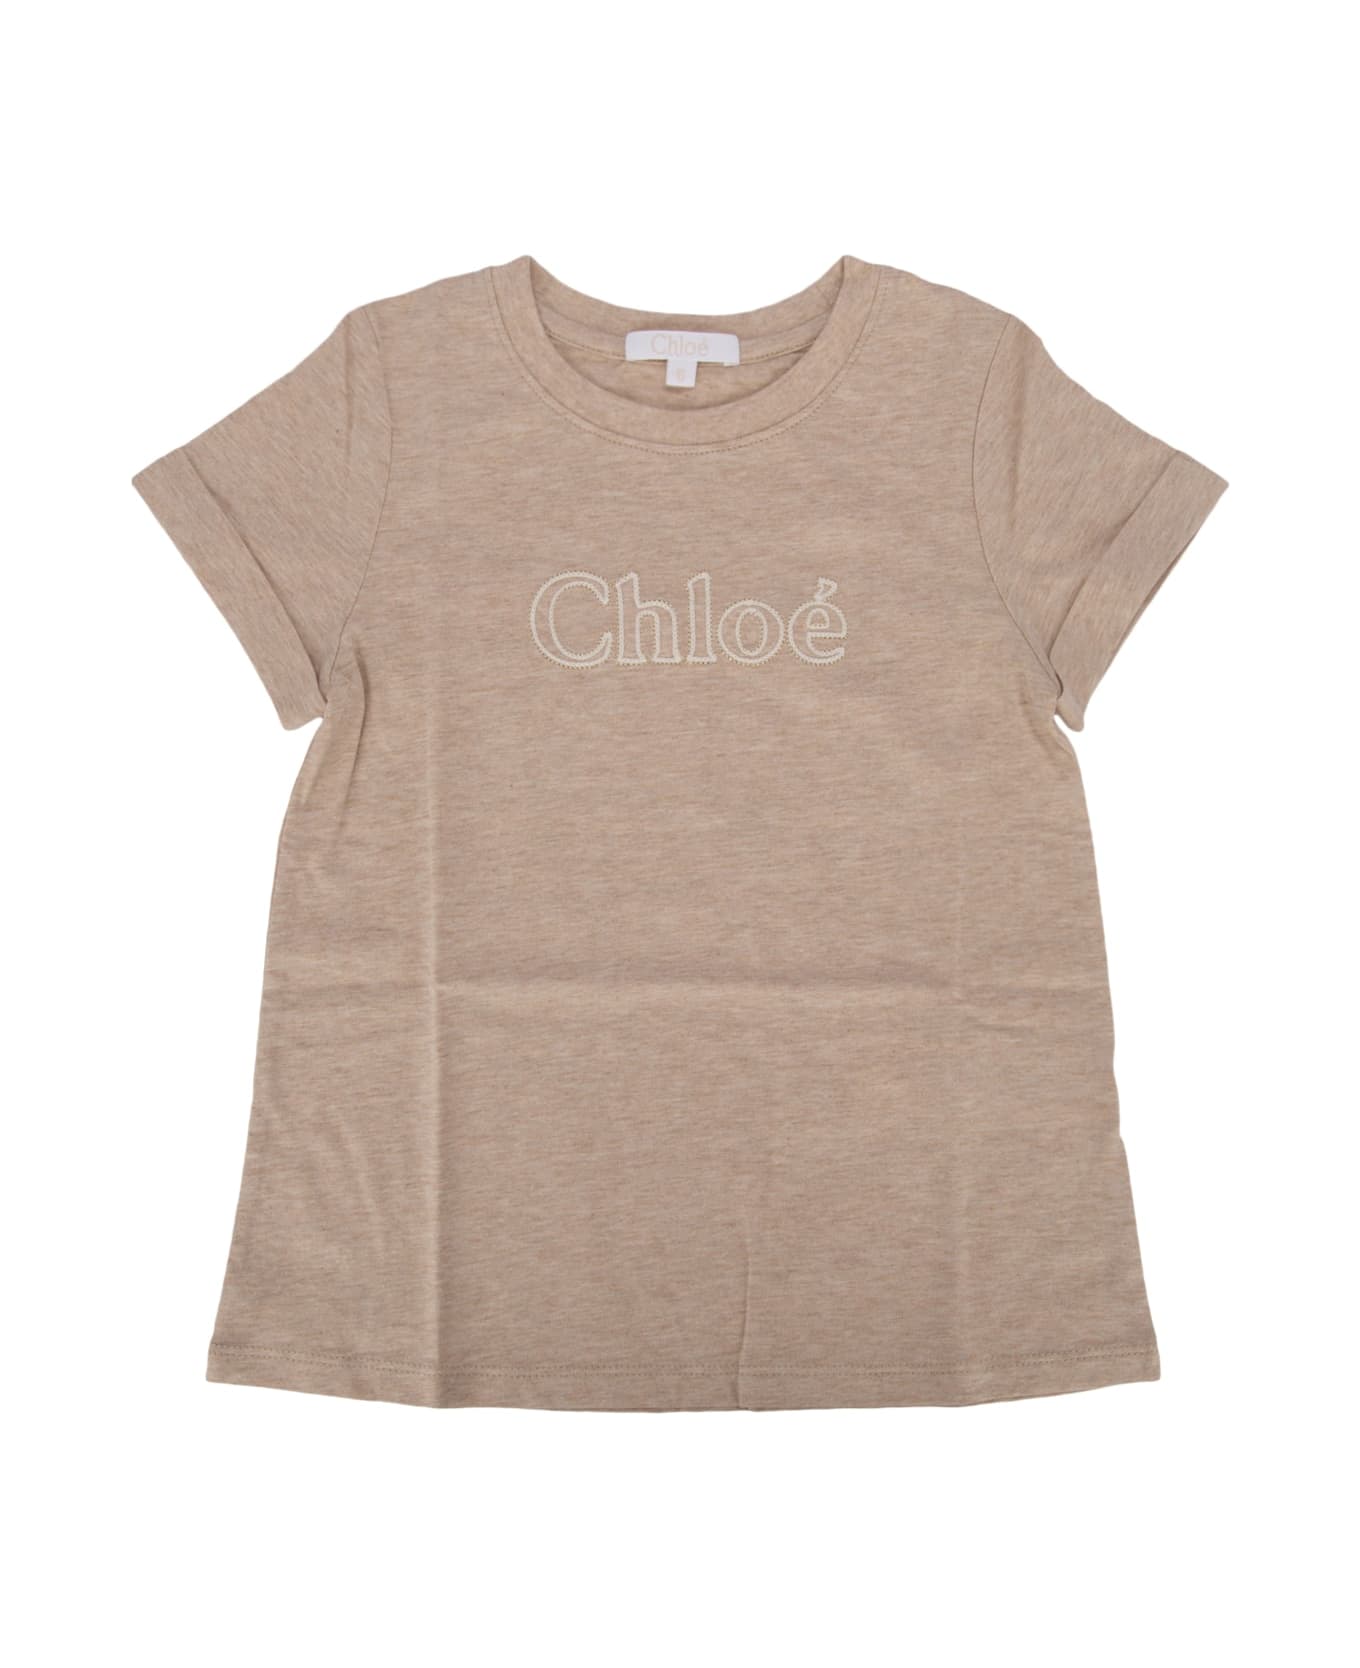 Chloé T-shirt - BEIGEANTICO